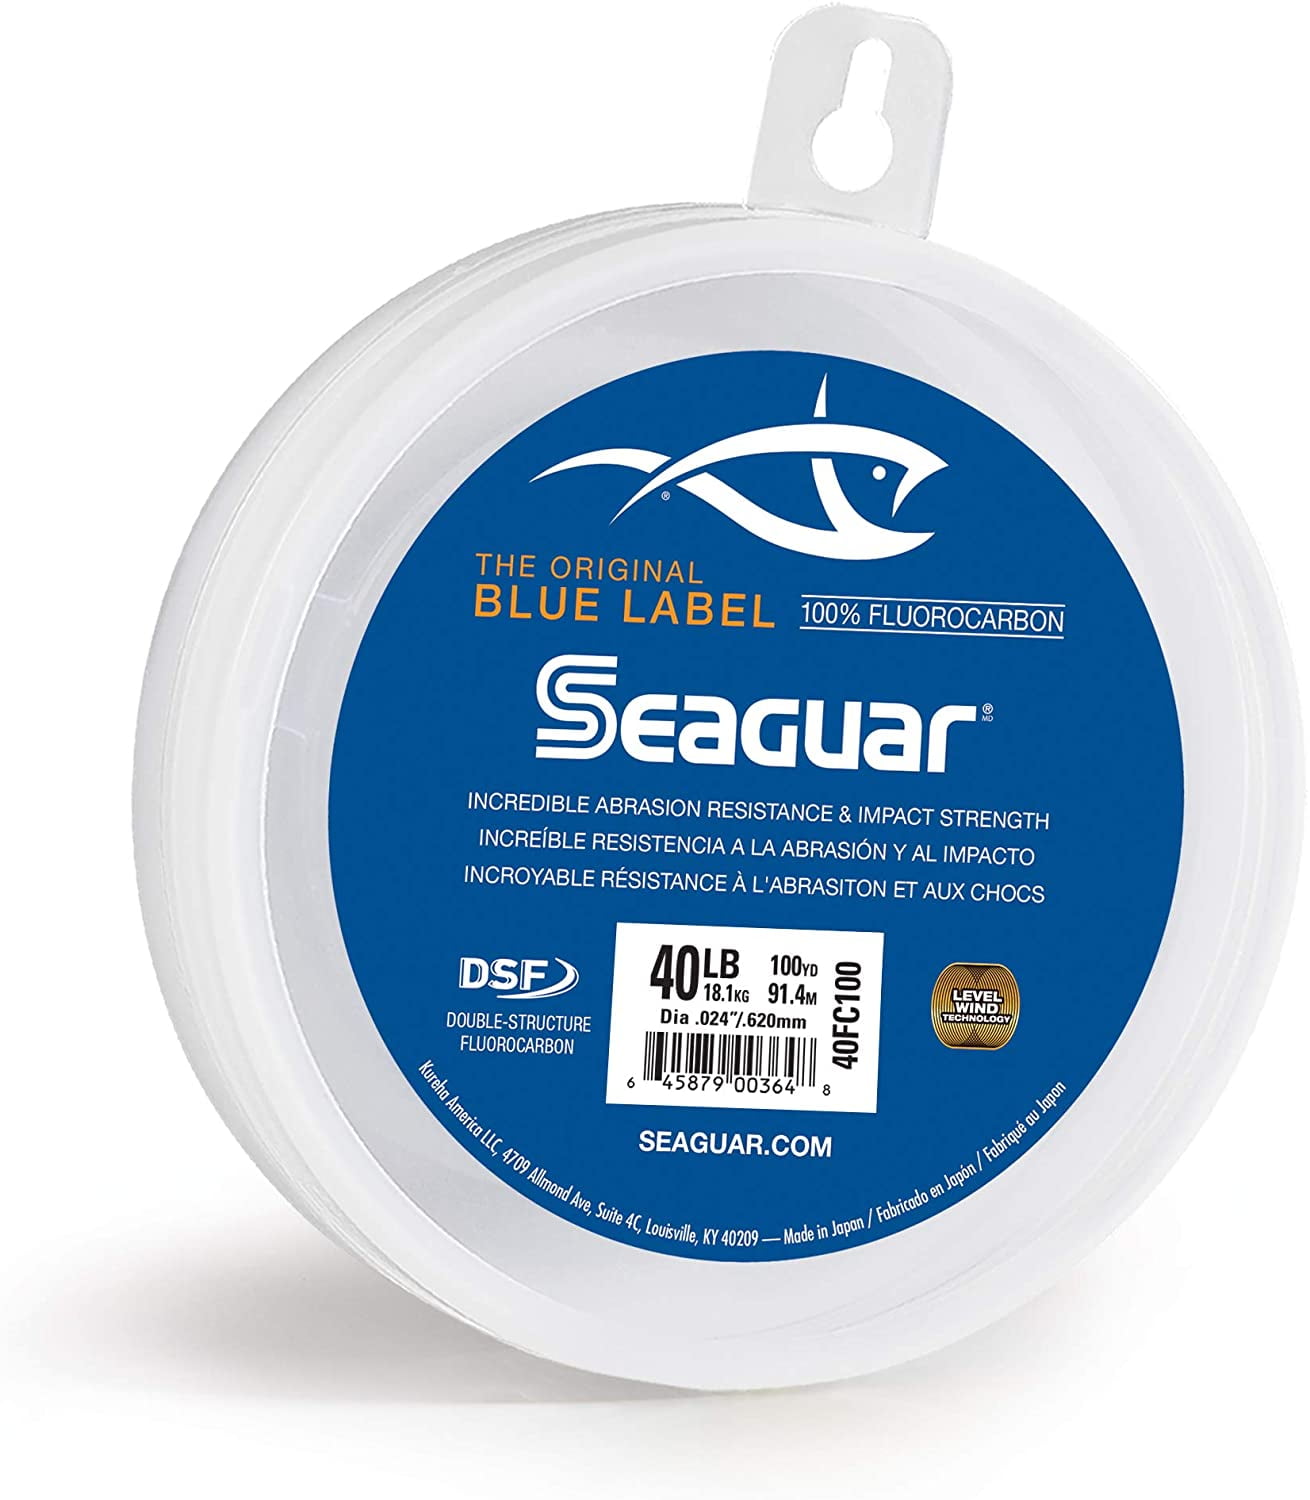 Seaguar Blue Label 100 Fluorocarbon Leader DSF 100yd 40lb for sale online